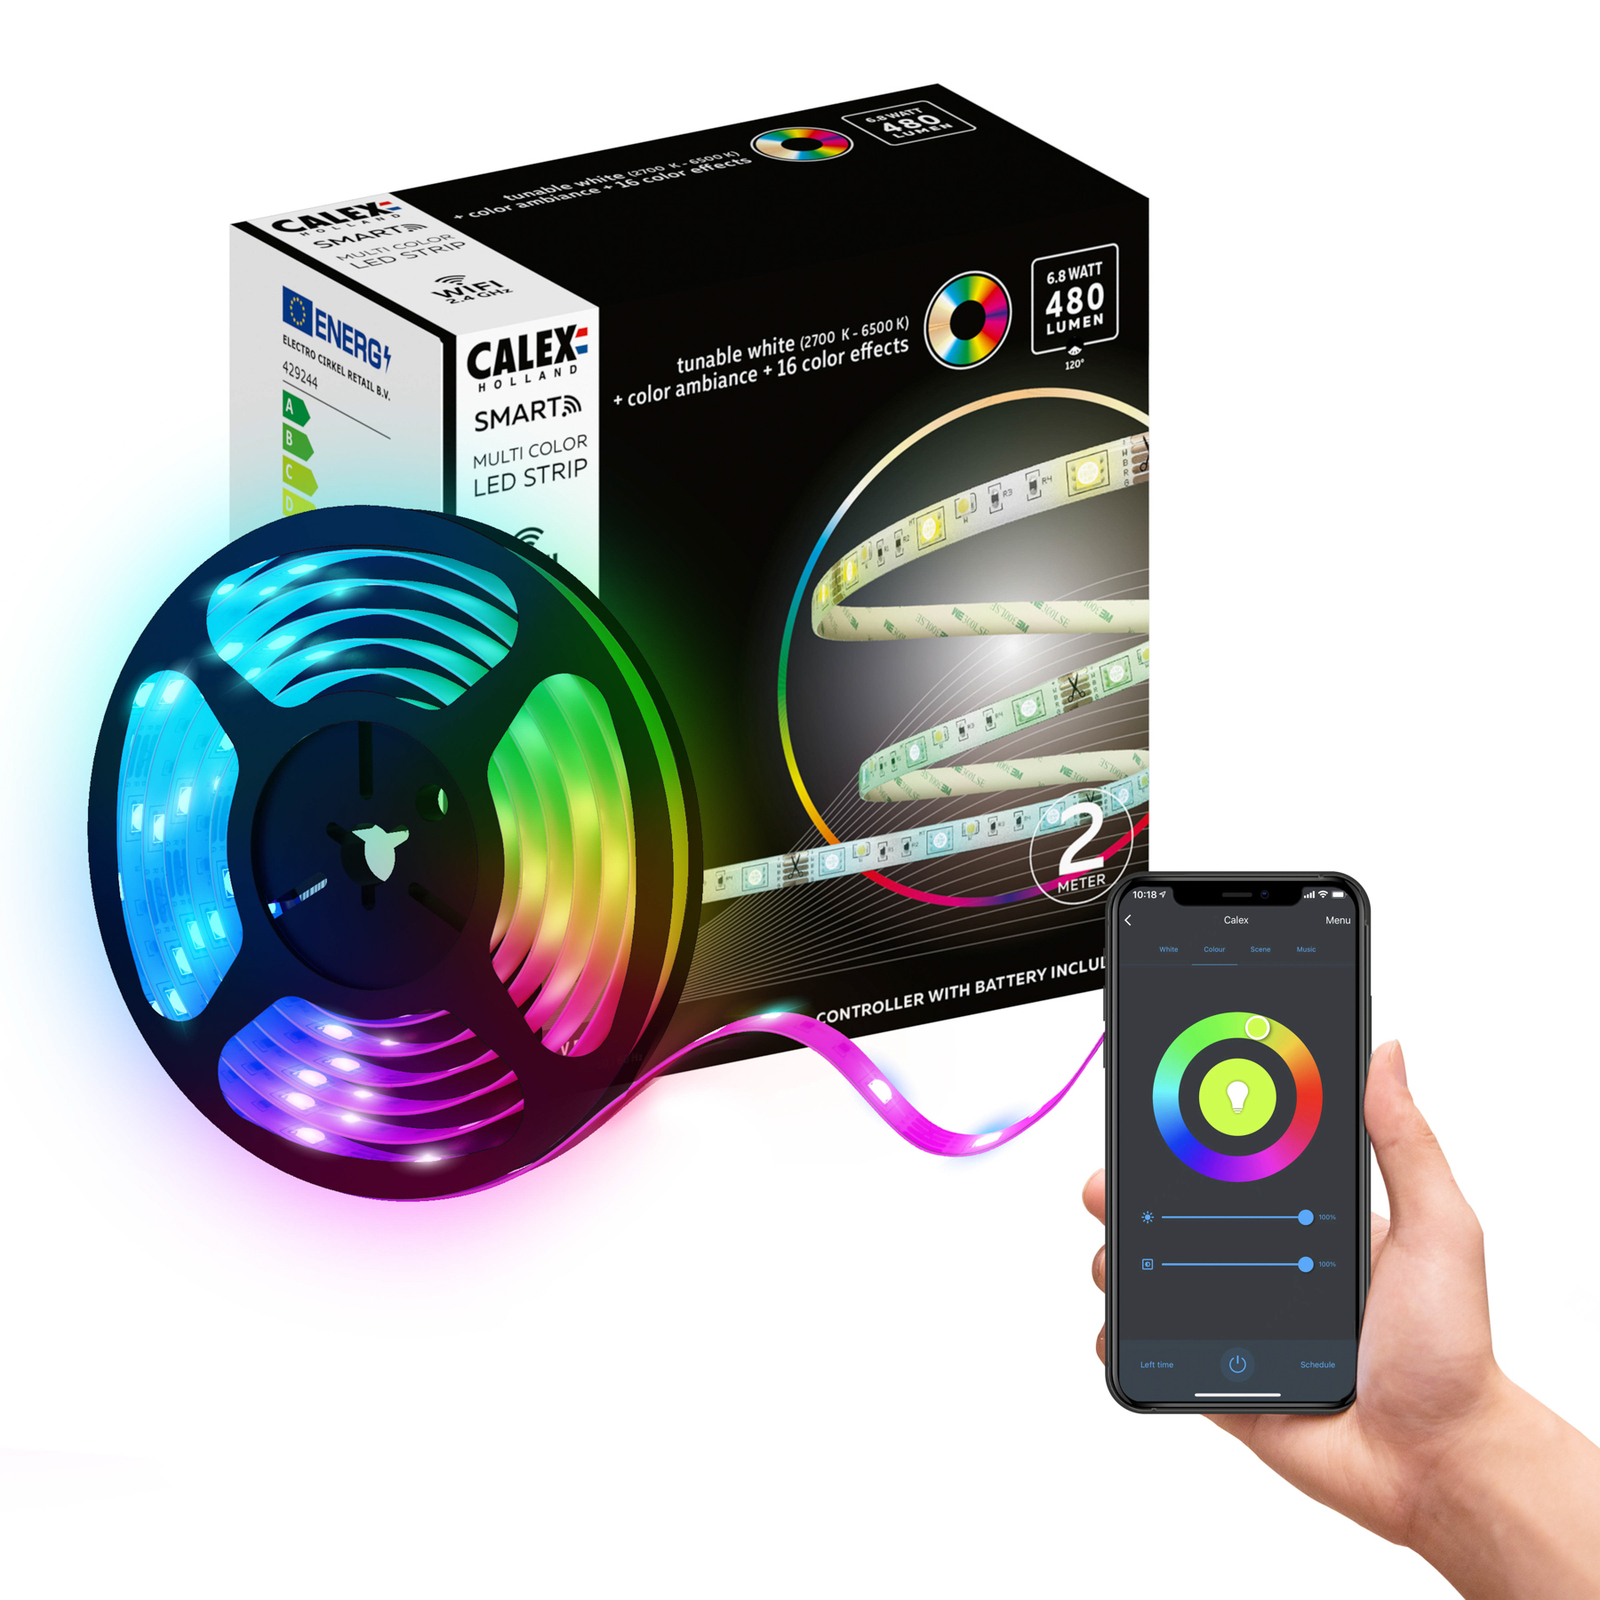 Calex Smart LED Striplight RGBW 2m remote control